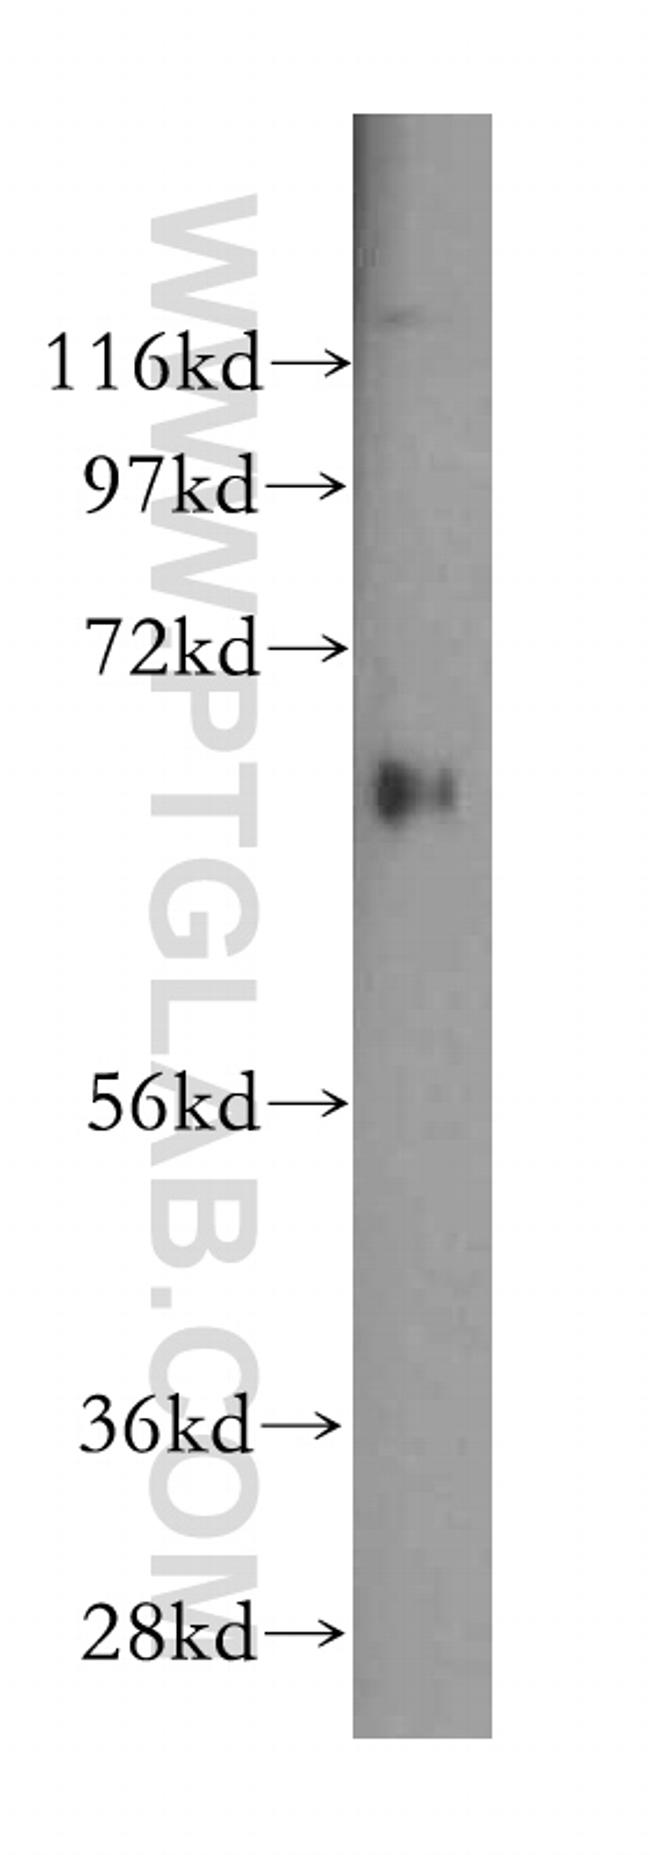 TSTA3 Antibody in Western Blot (WB)